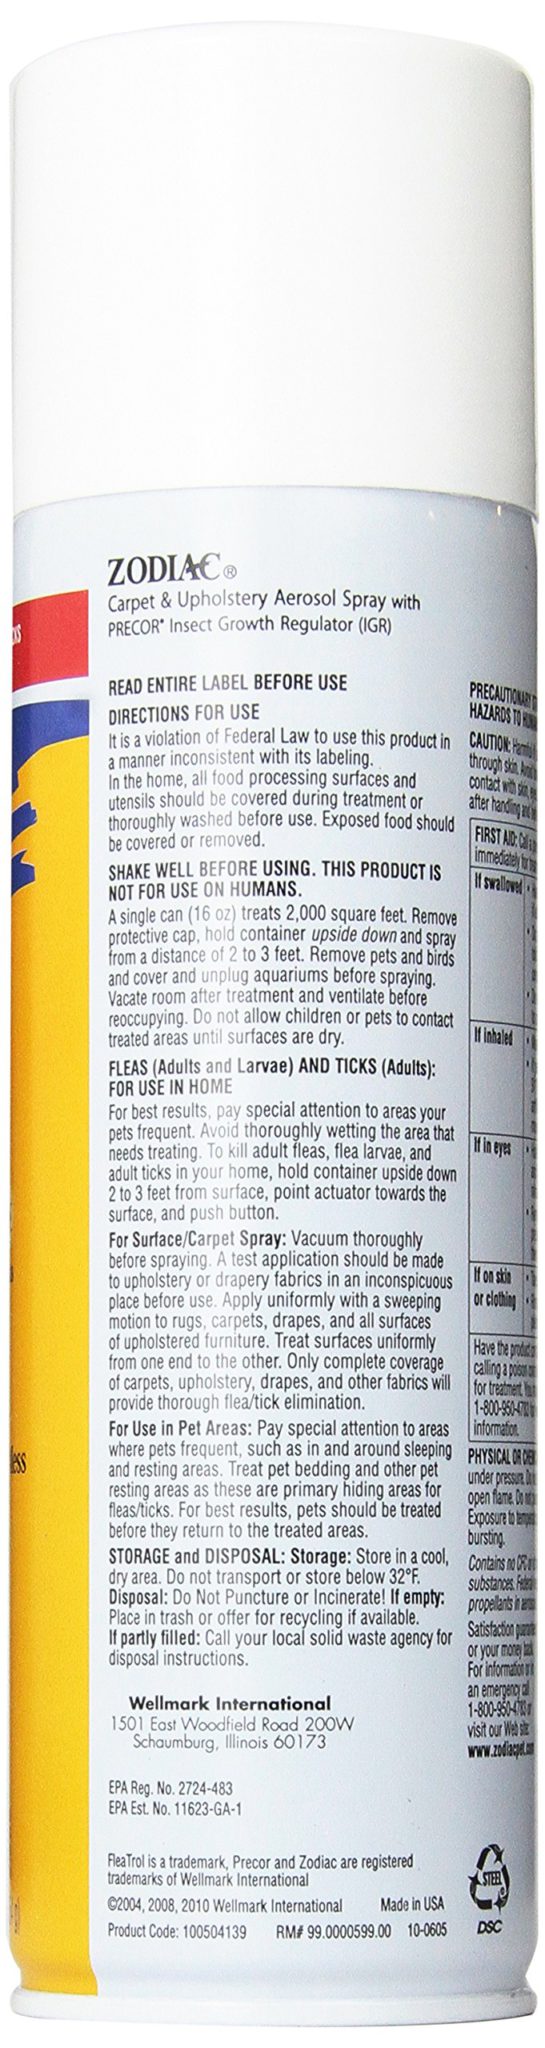 Zodiac Carpet and Upholstery Aerosol Spray 16-Ounce Standard Packaging - $16.95